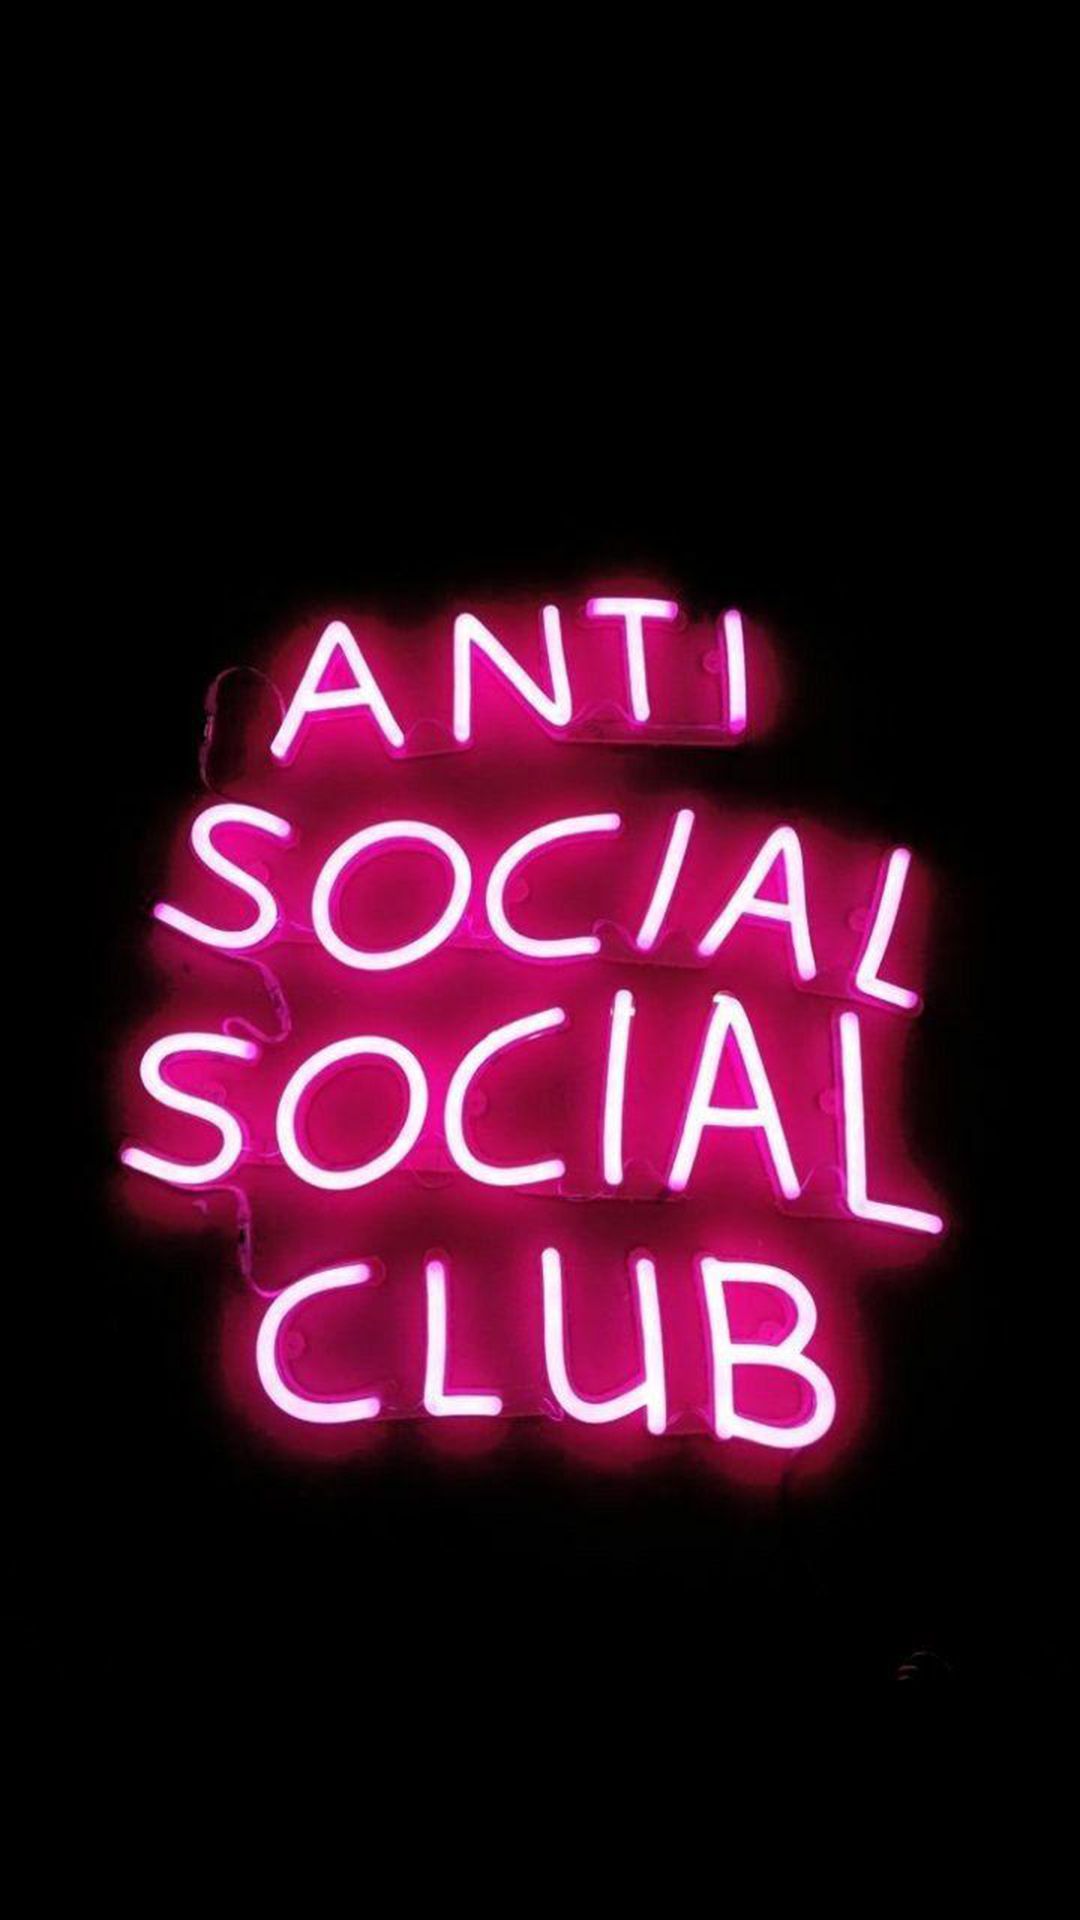 Anti social club neon sign - Neon pink